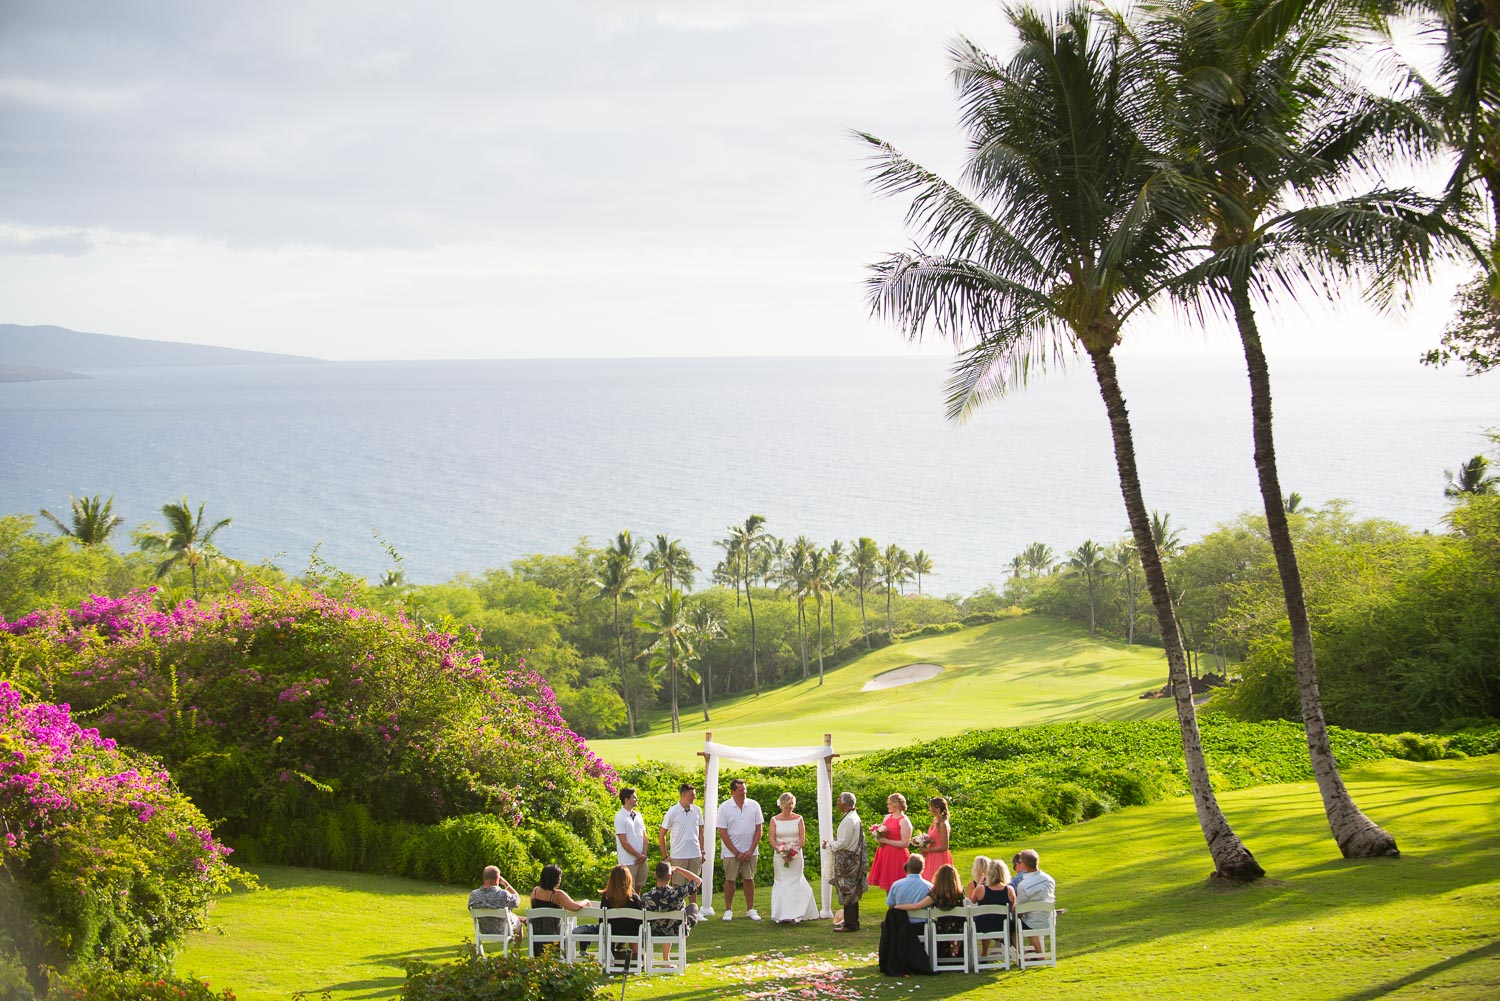 Wedding Ceremony at Gannon's Maui Restaurant. A wedding venue w a view